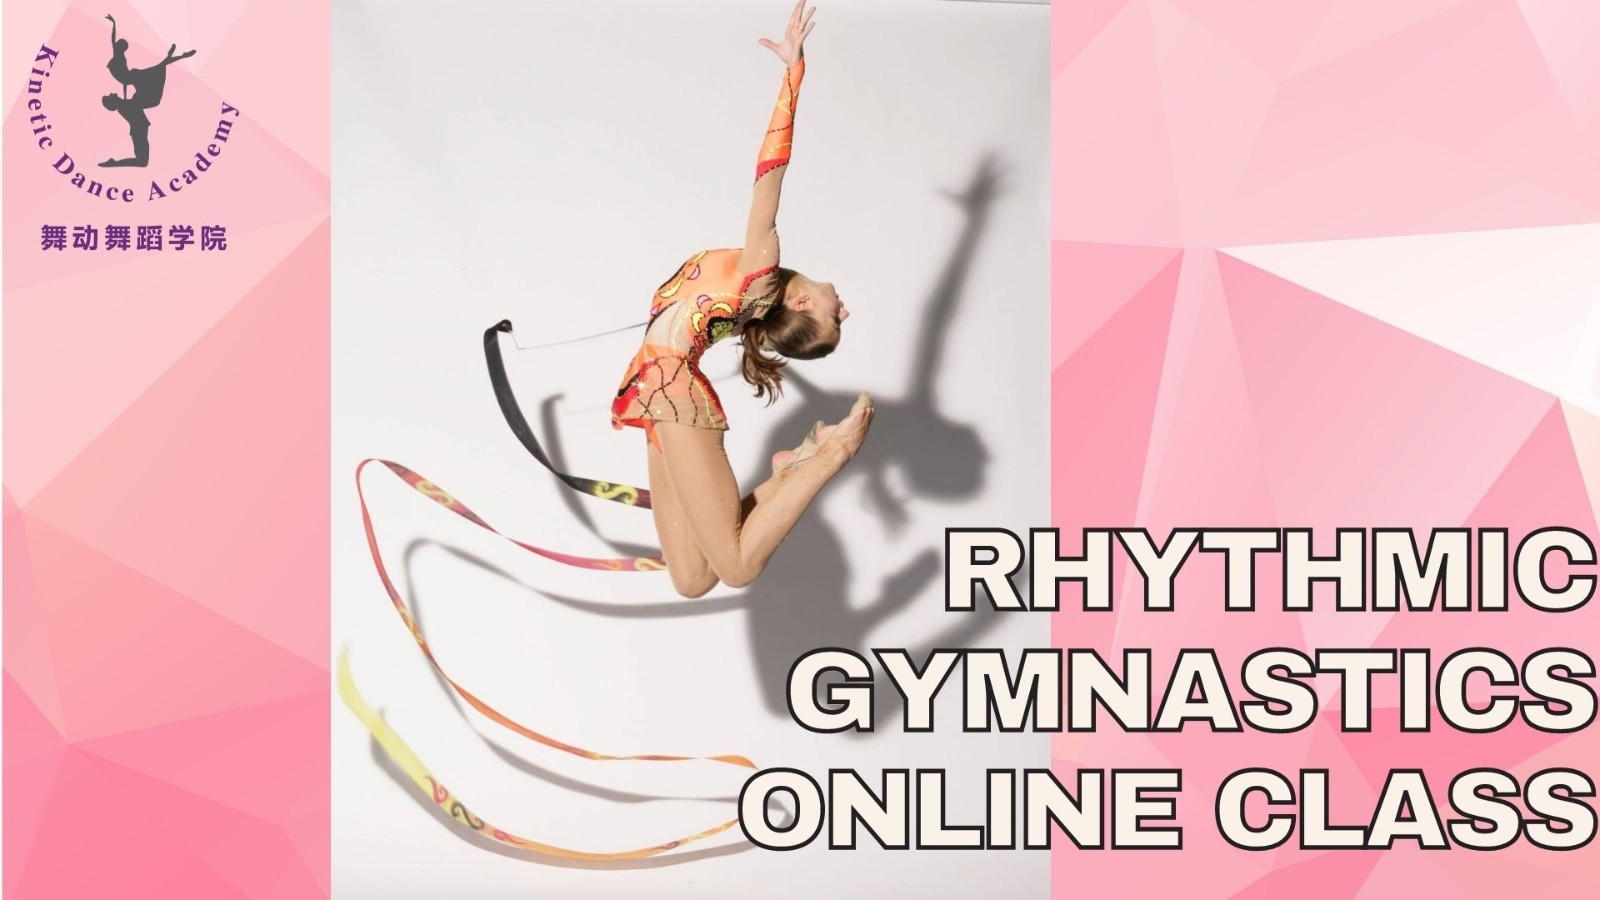 Online Rhythmic Gymnastics Class Rhythmic Gymnastics Malaysia, Kuala Lumpur (KL), Selangor, Cheras Classes, Lessons, Academy 